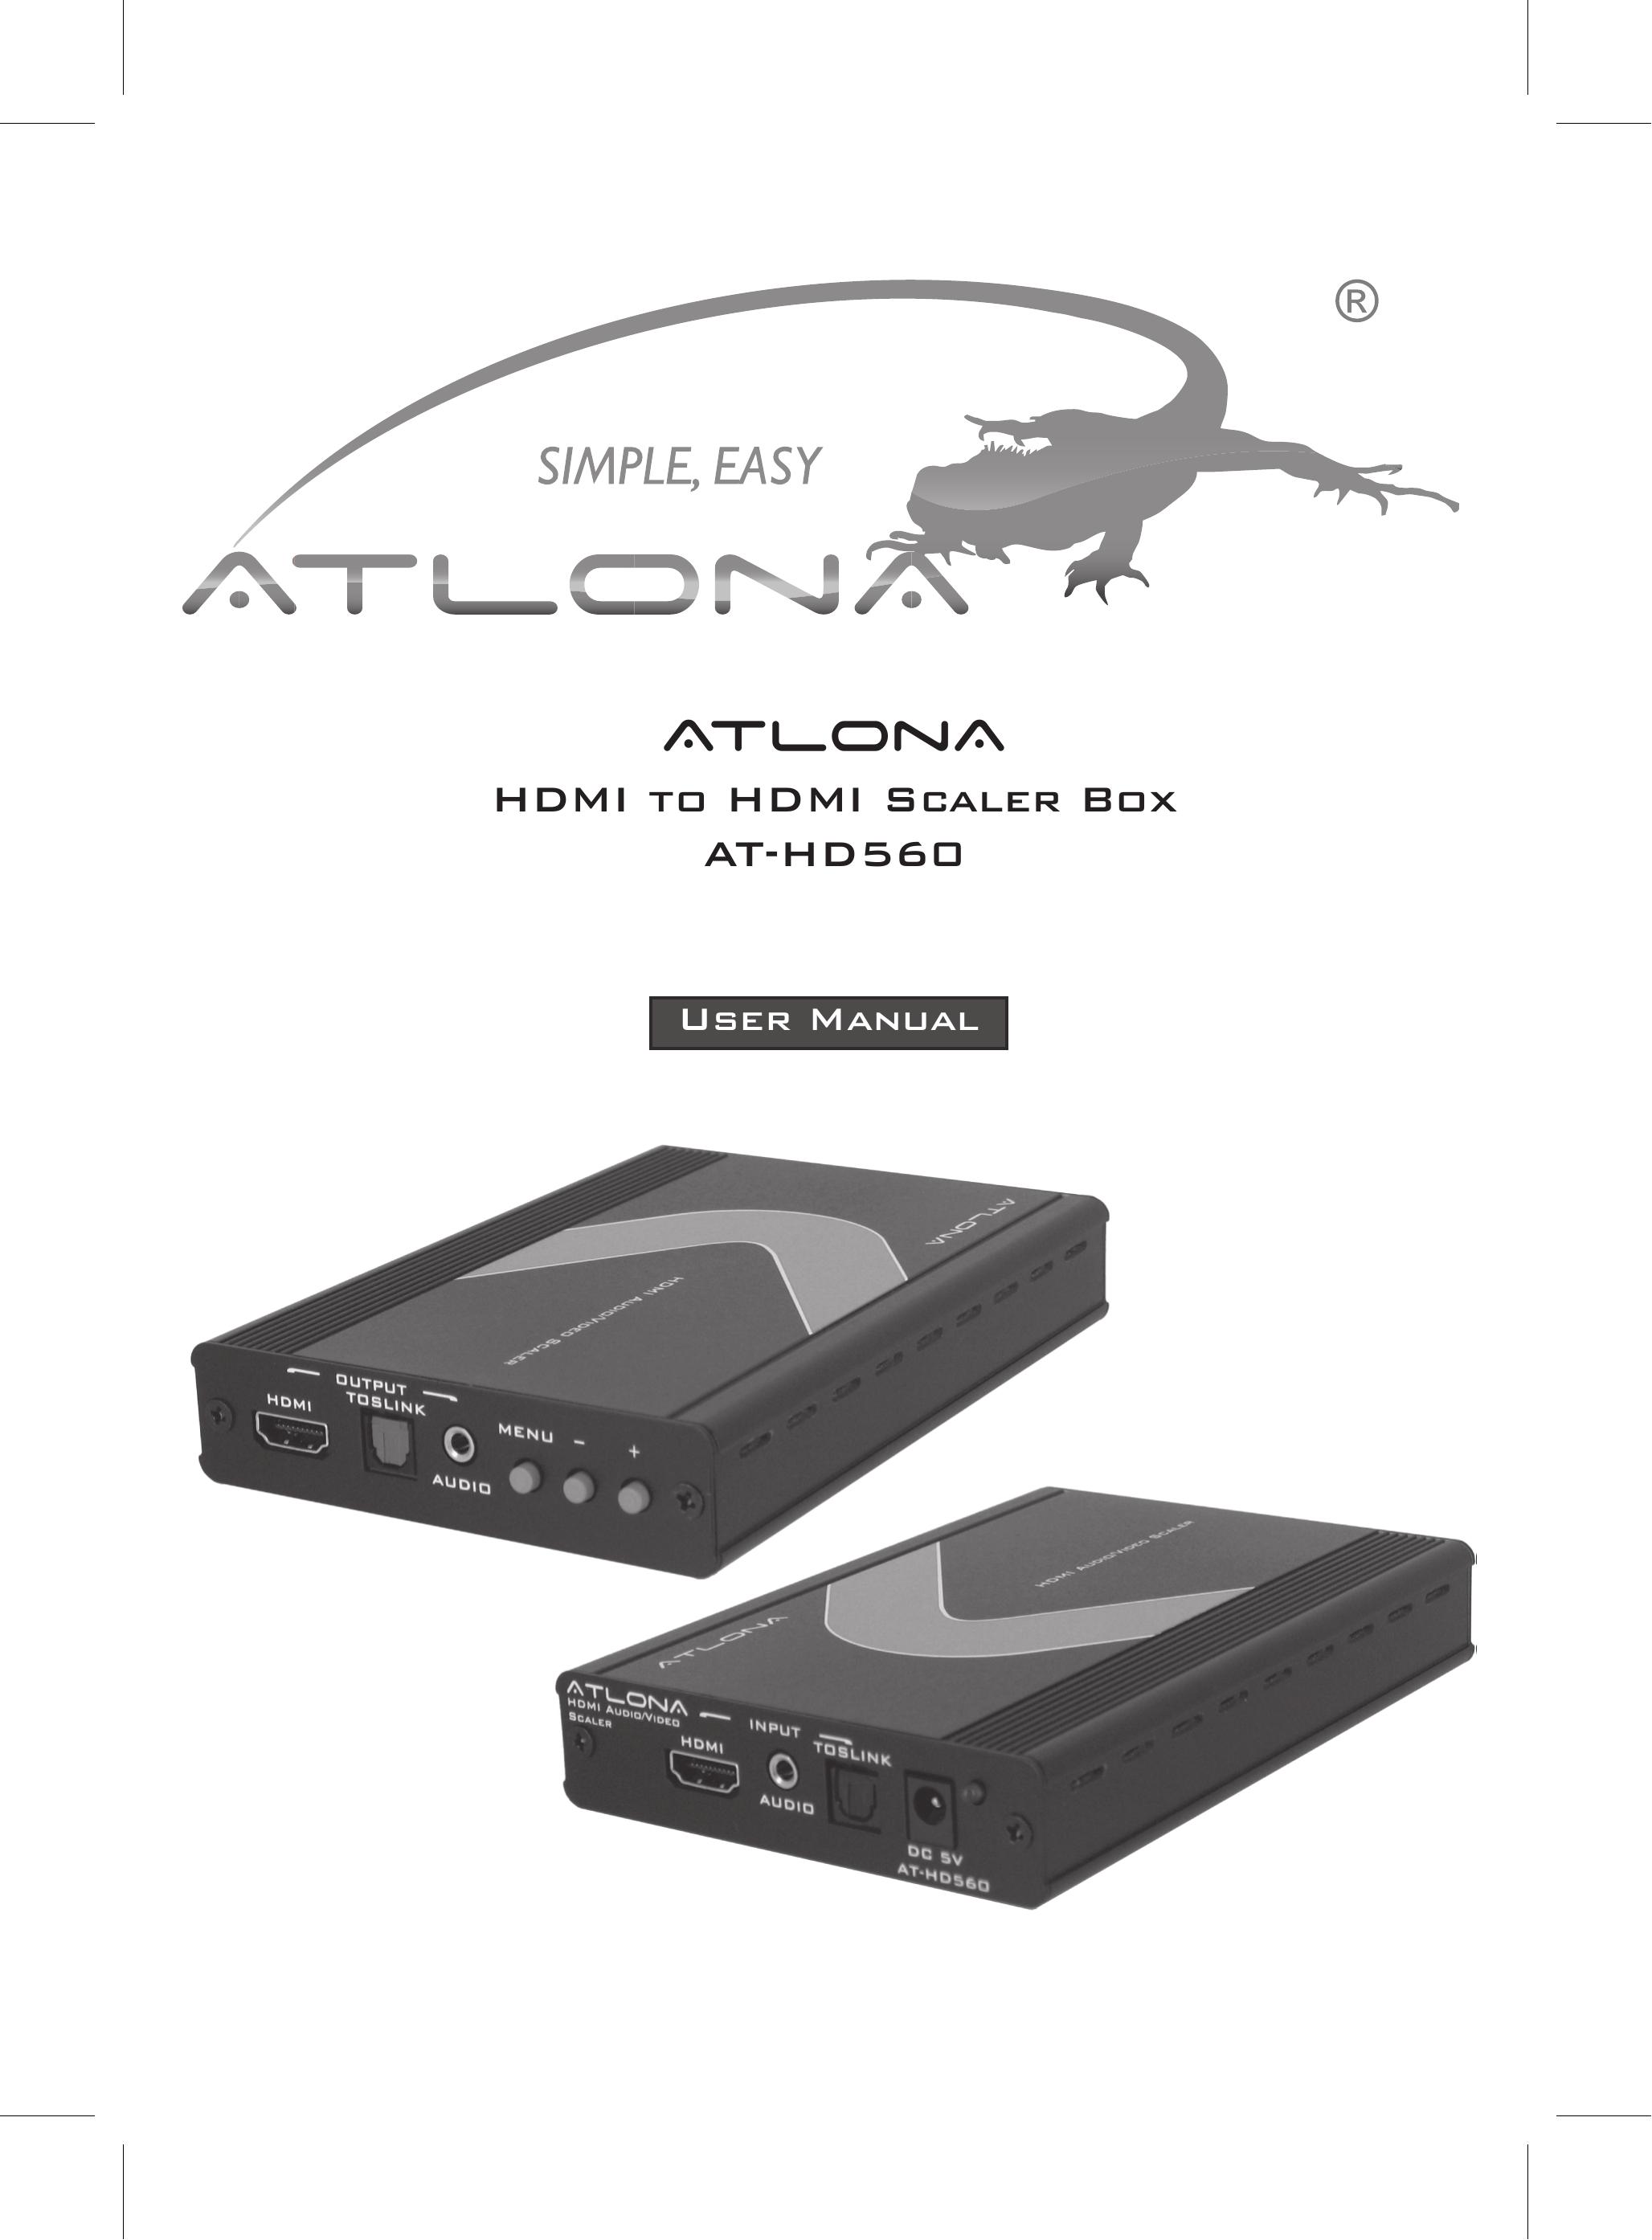 Atlona AT-HD560 Microscope & Magnifier User Manual